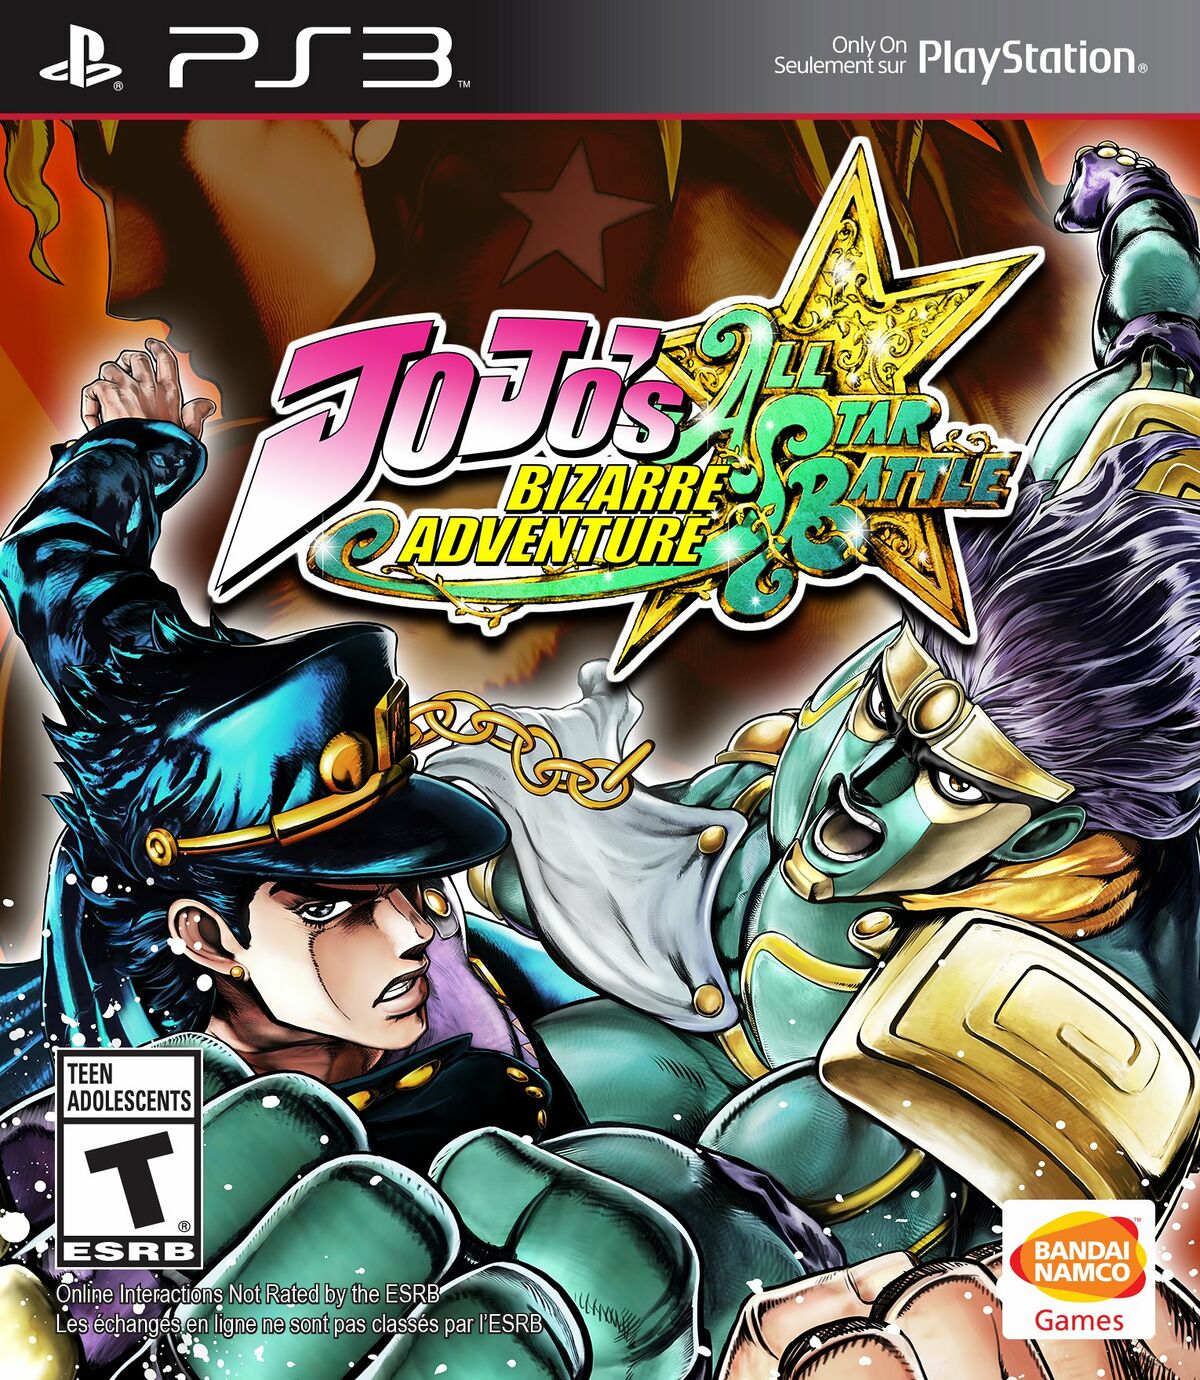 THE NEW JOJO GAME IS HERE! JoJo's Bizarre Adventure: All Star Battle R 